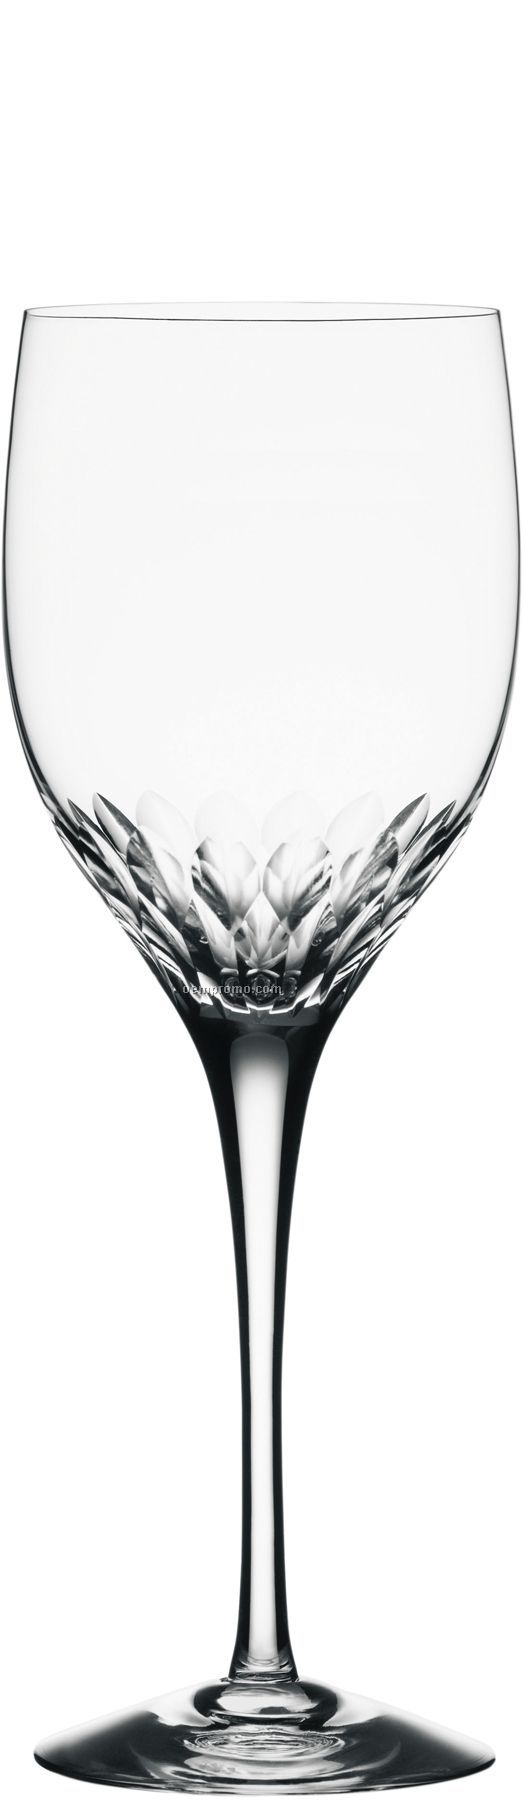 Prelude Crystal Goblet Glass W/ Leaf Pattern